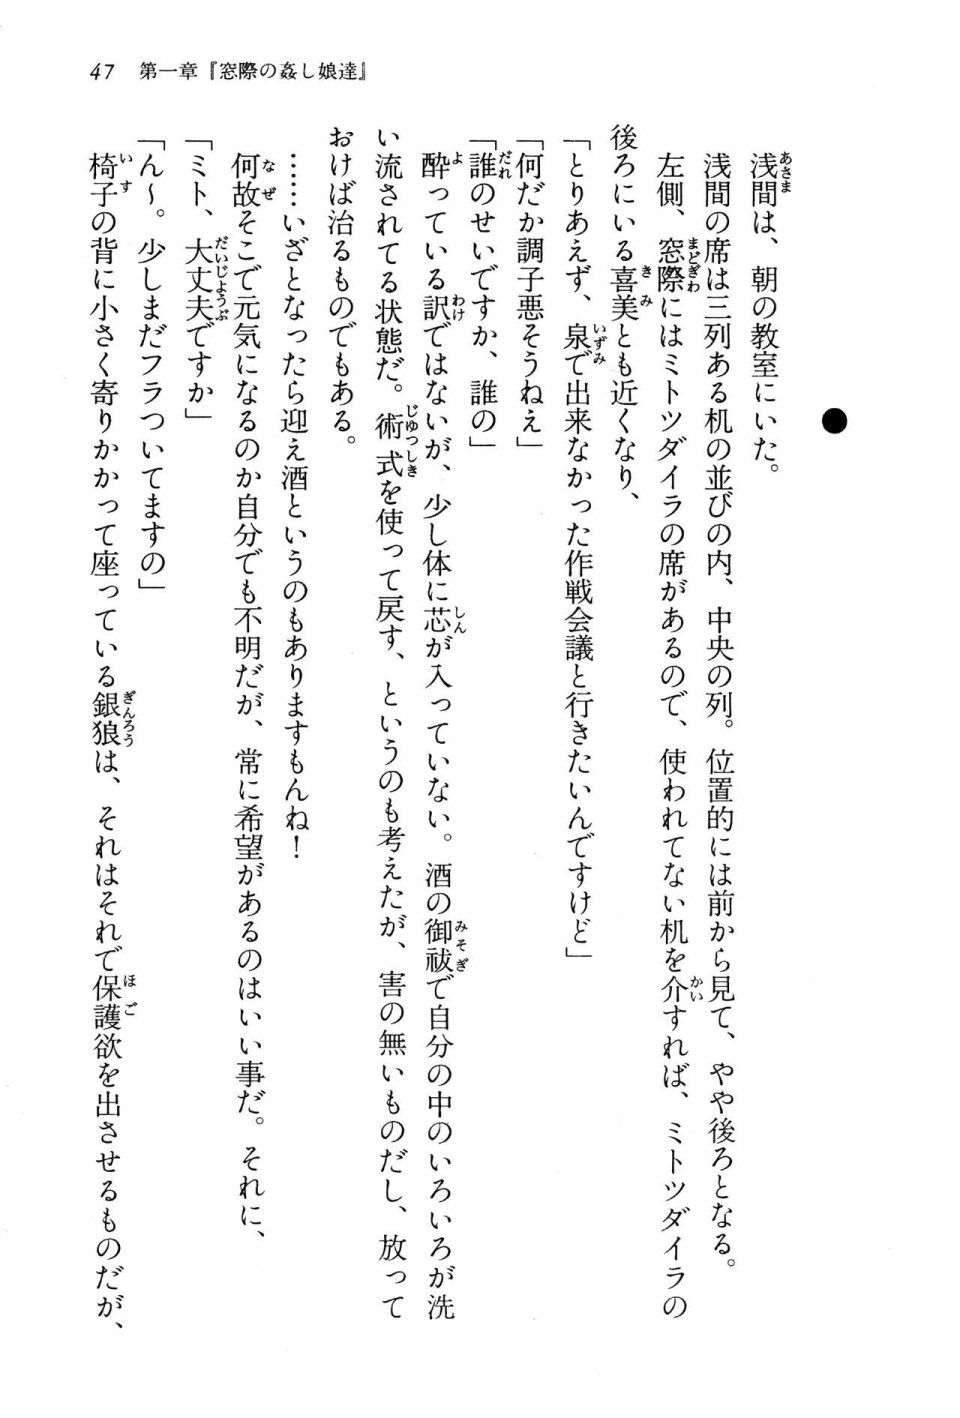 Kyoukai Senjou no Horizon BD Special Mininovel Vol 5(3A) - Photo #51